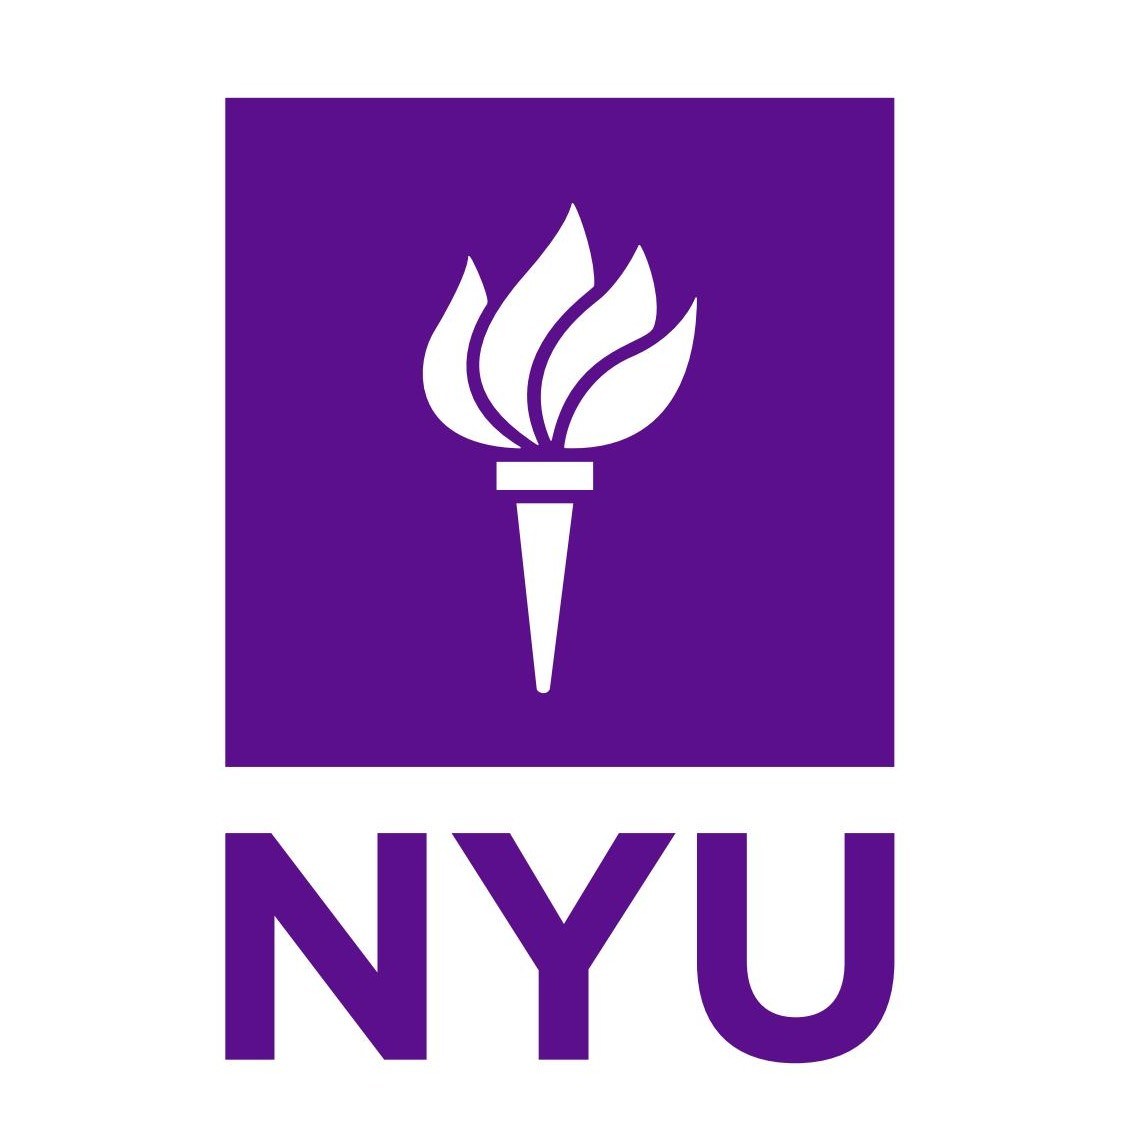 New York University (NYU)